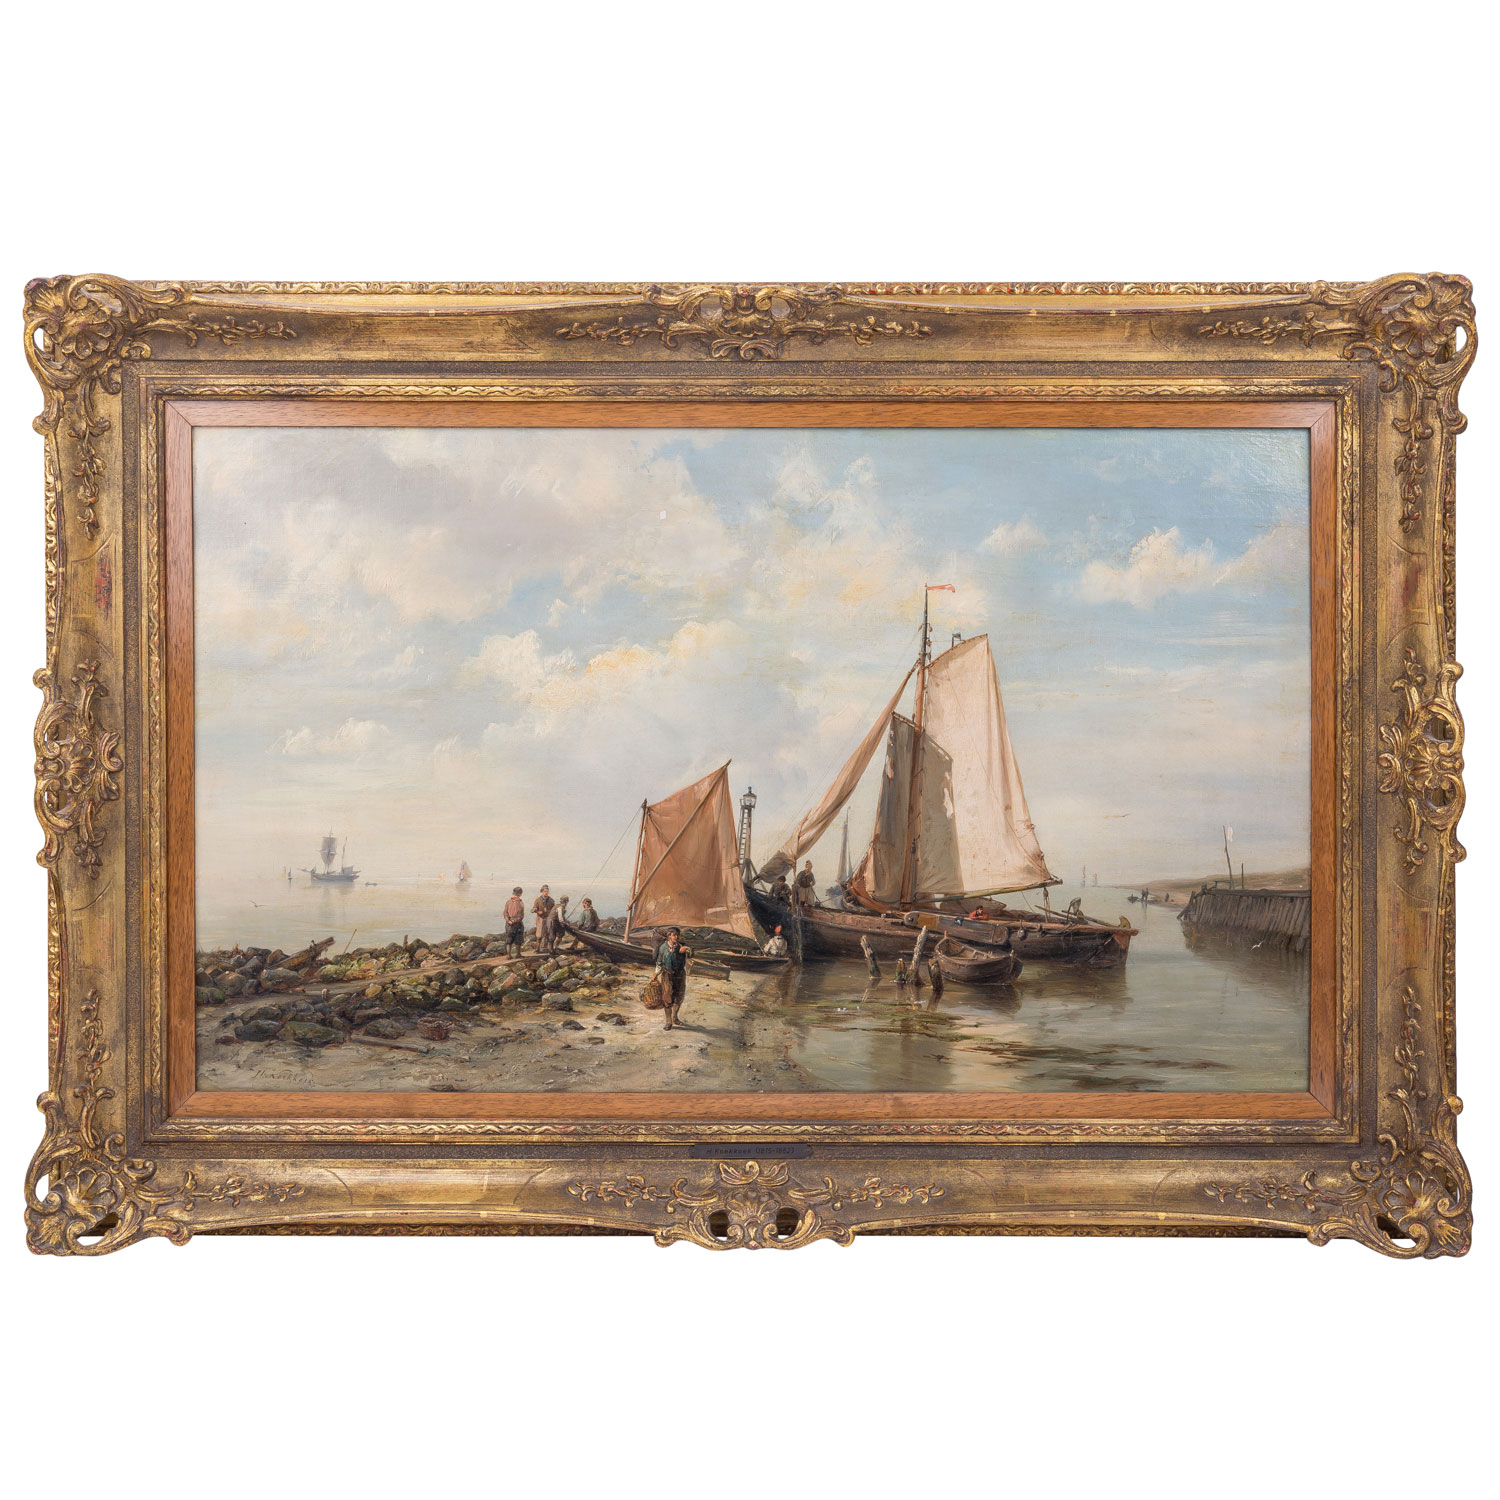 KOEKKOEK, HERMANUS I (1815-1882), "Fischer mit ihren Booten am Strand", - Image 2 of 7